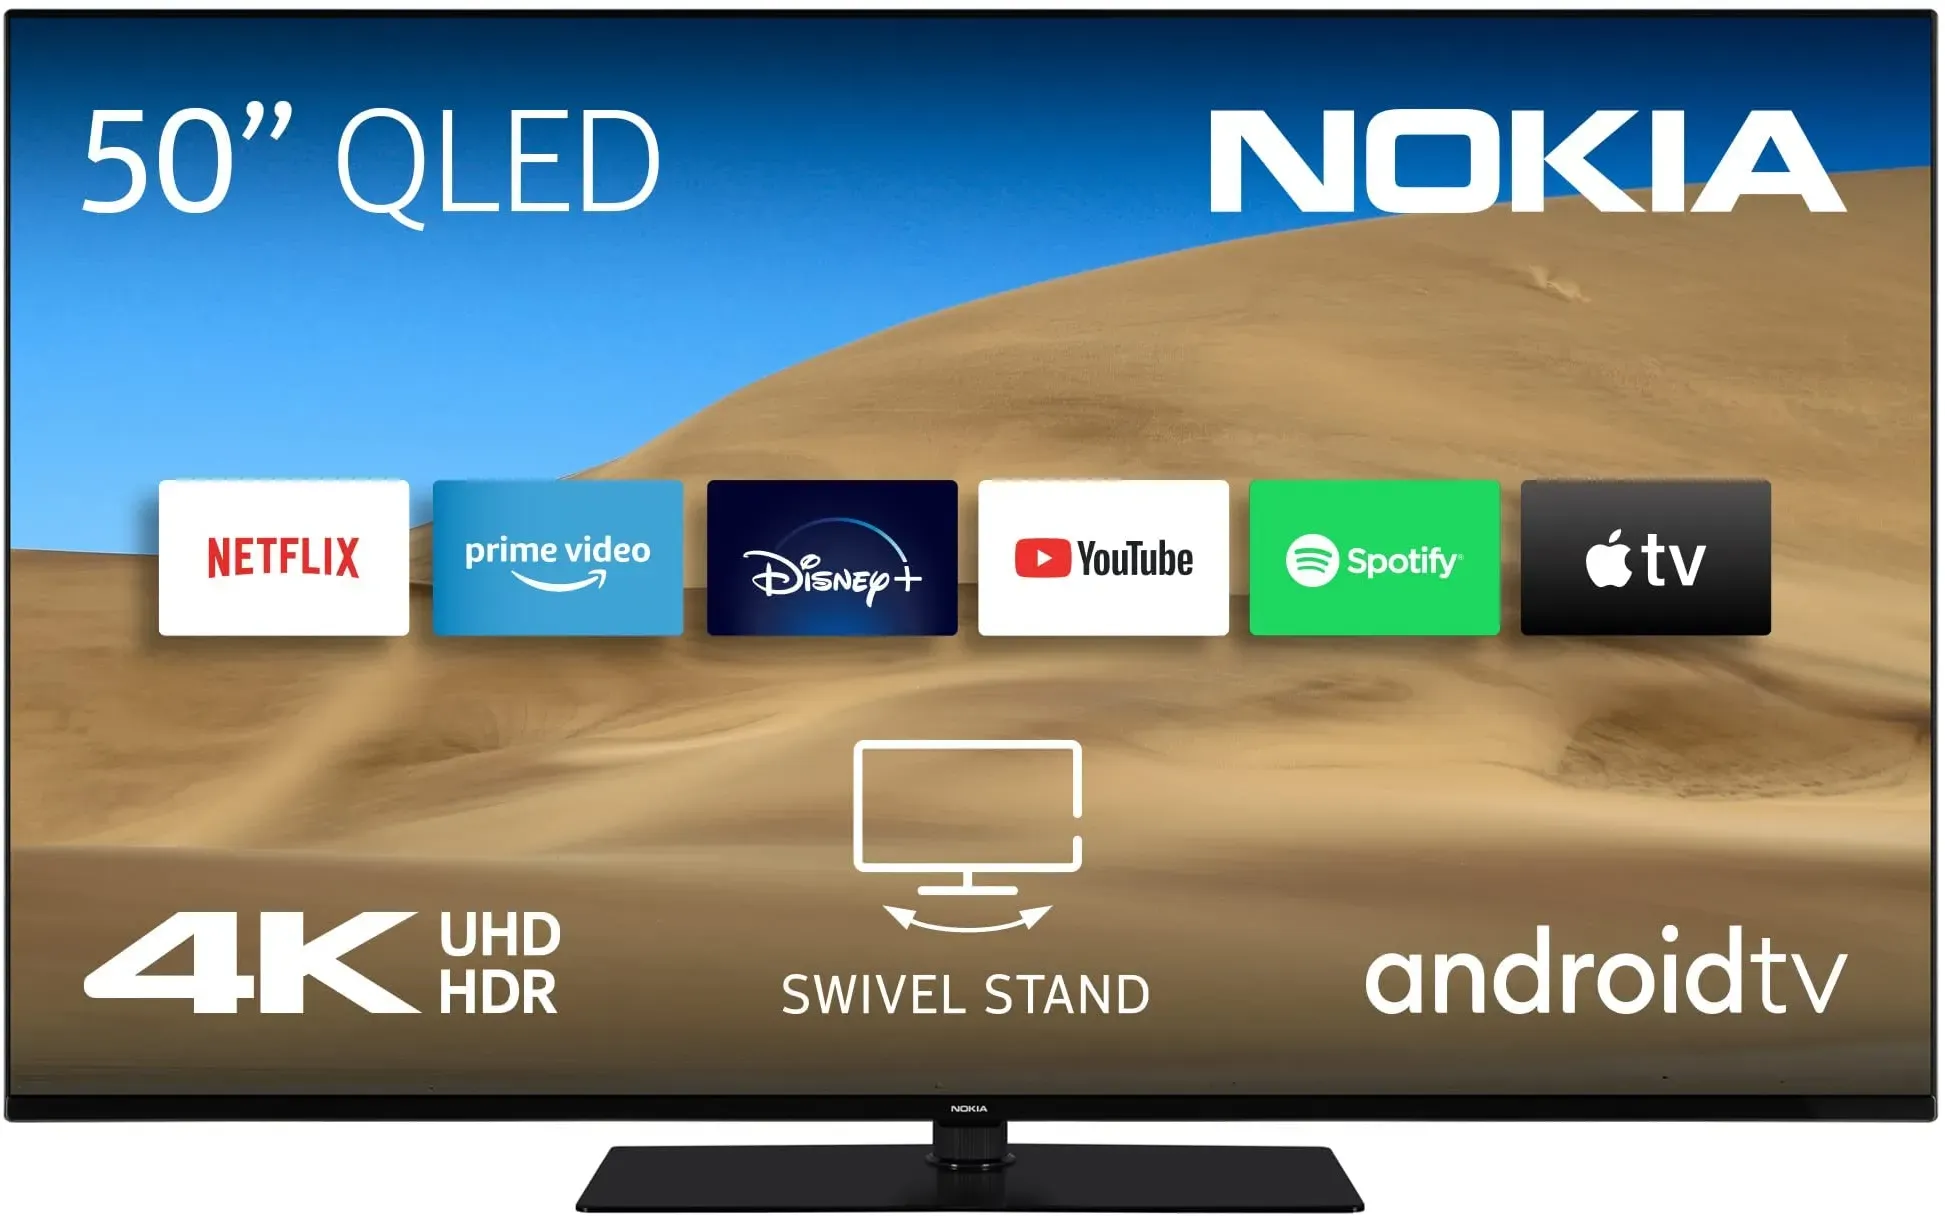 Nokia 50 Zoll (126cm) QLED 4K UHD Fernseher Smart Android TV (WLAN, HDR, Triple Tuner DVB-C/S2/T2, Netflix, YouTube, Prime Video, Disney+) - QNR50GV215ISW - 2022